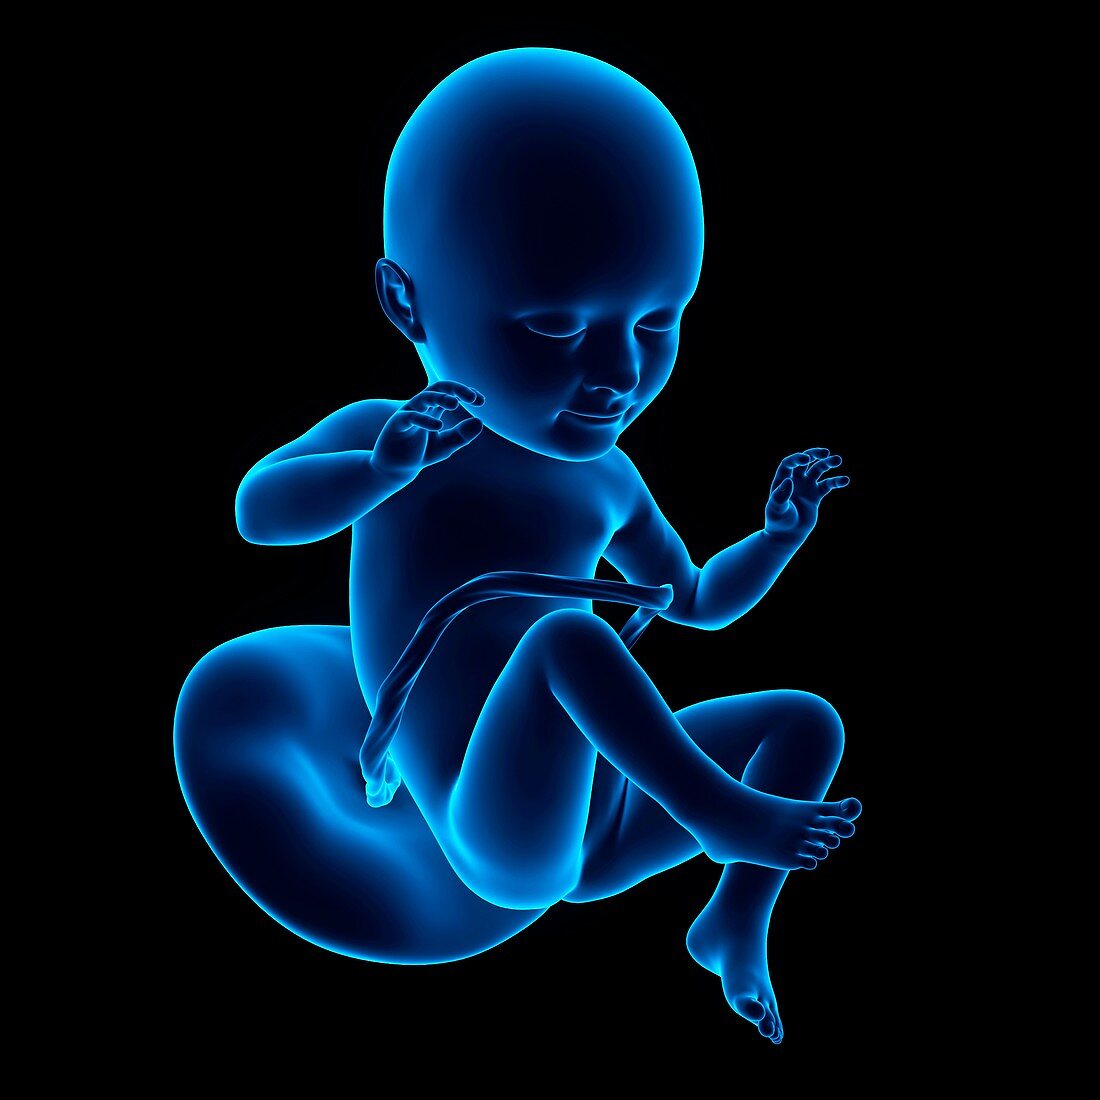 Human fetus age 34 weeks